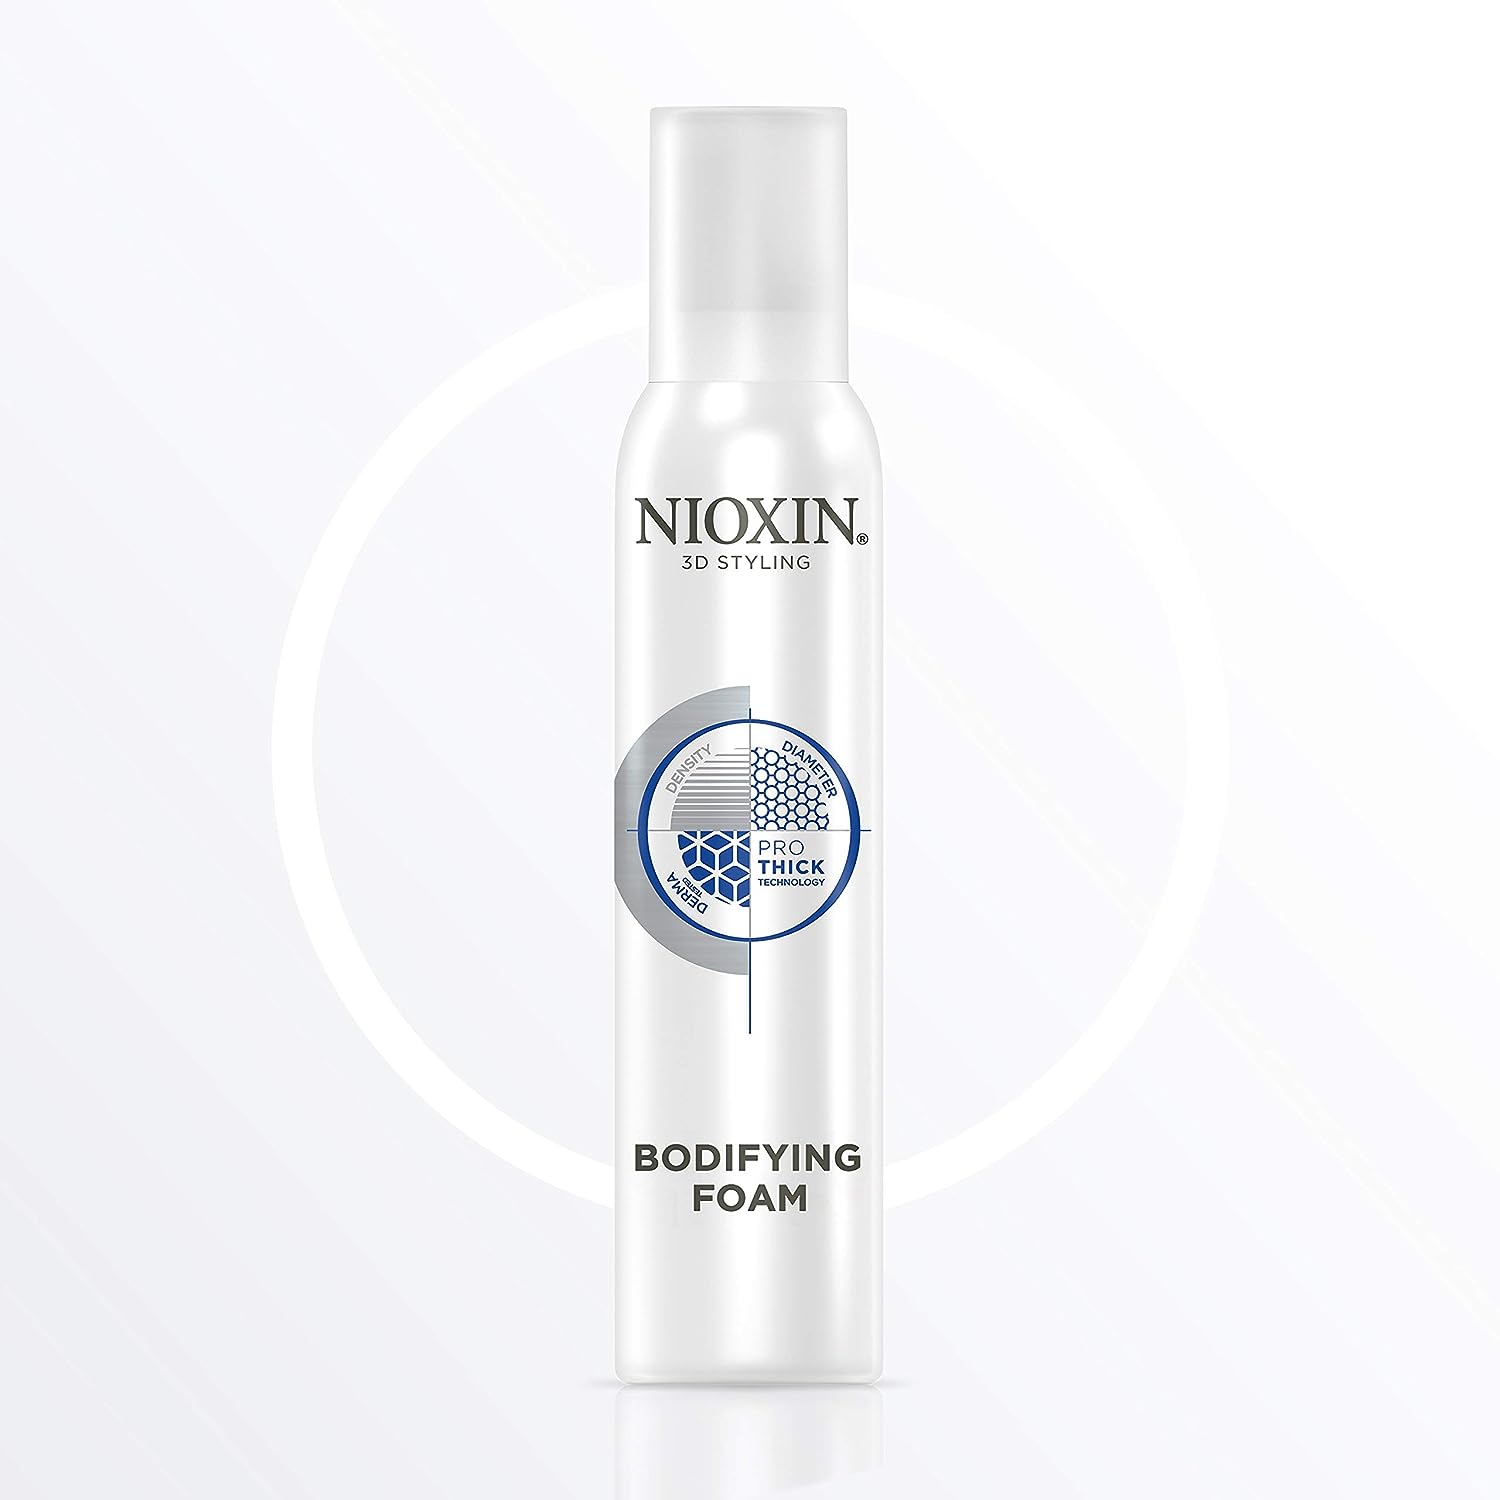 NIOXIN Professional Bodifying Foam 200ml